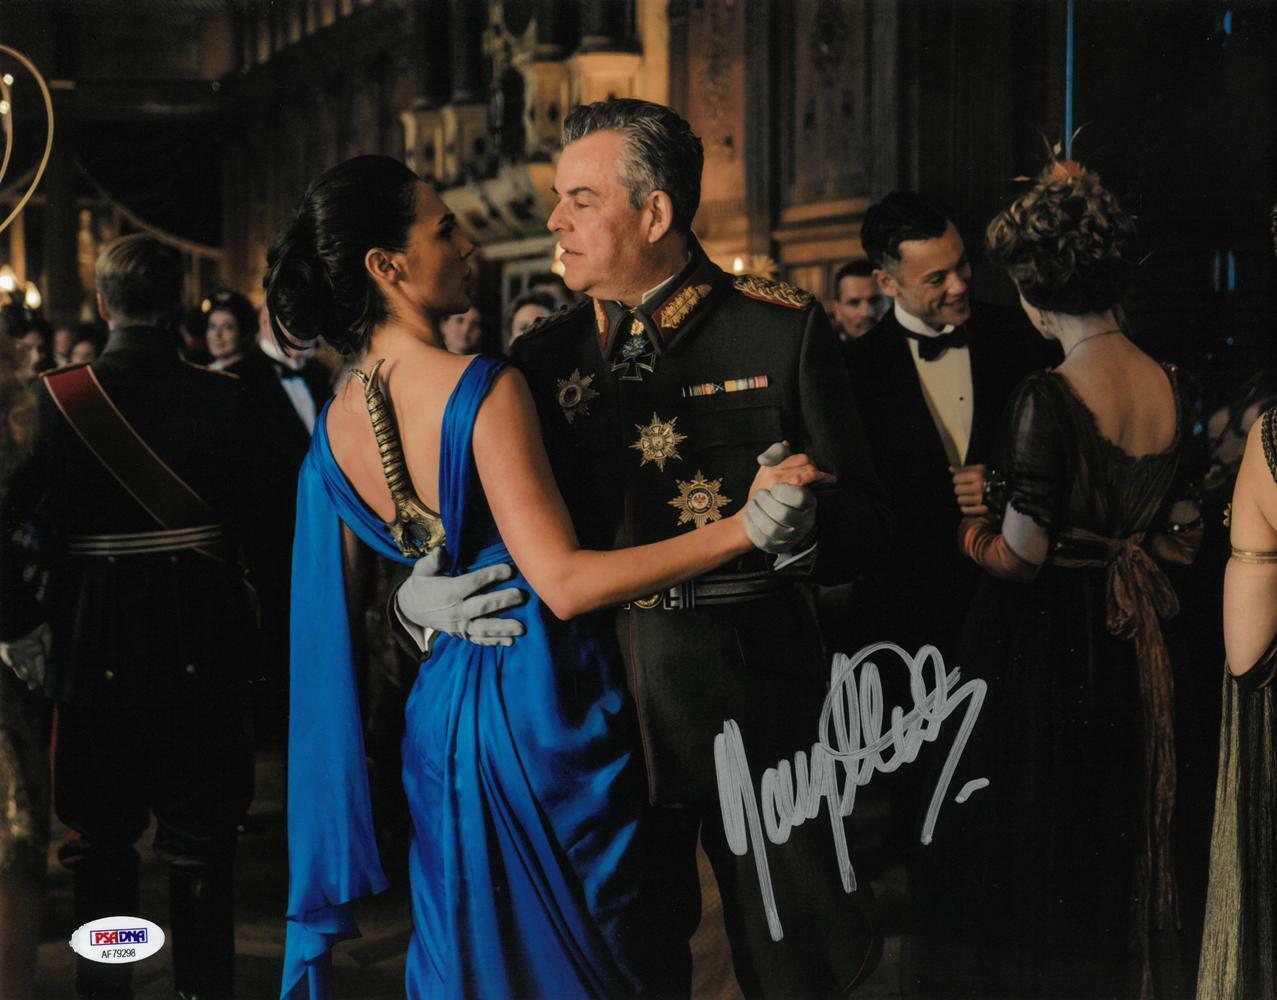 Danny Huston Signed Wonder Woman Autographed 11x14 Photo Poster painting PSA/DNA #AF79298